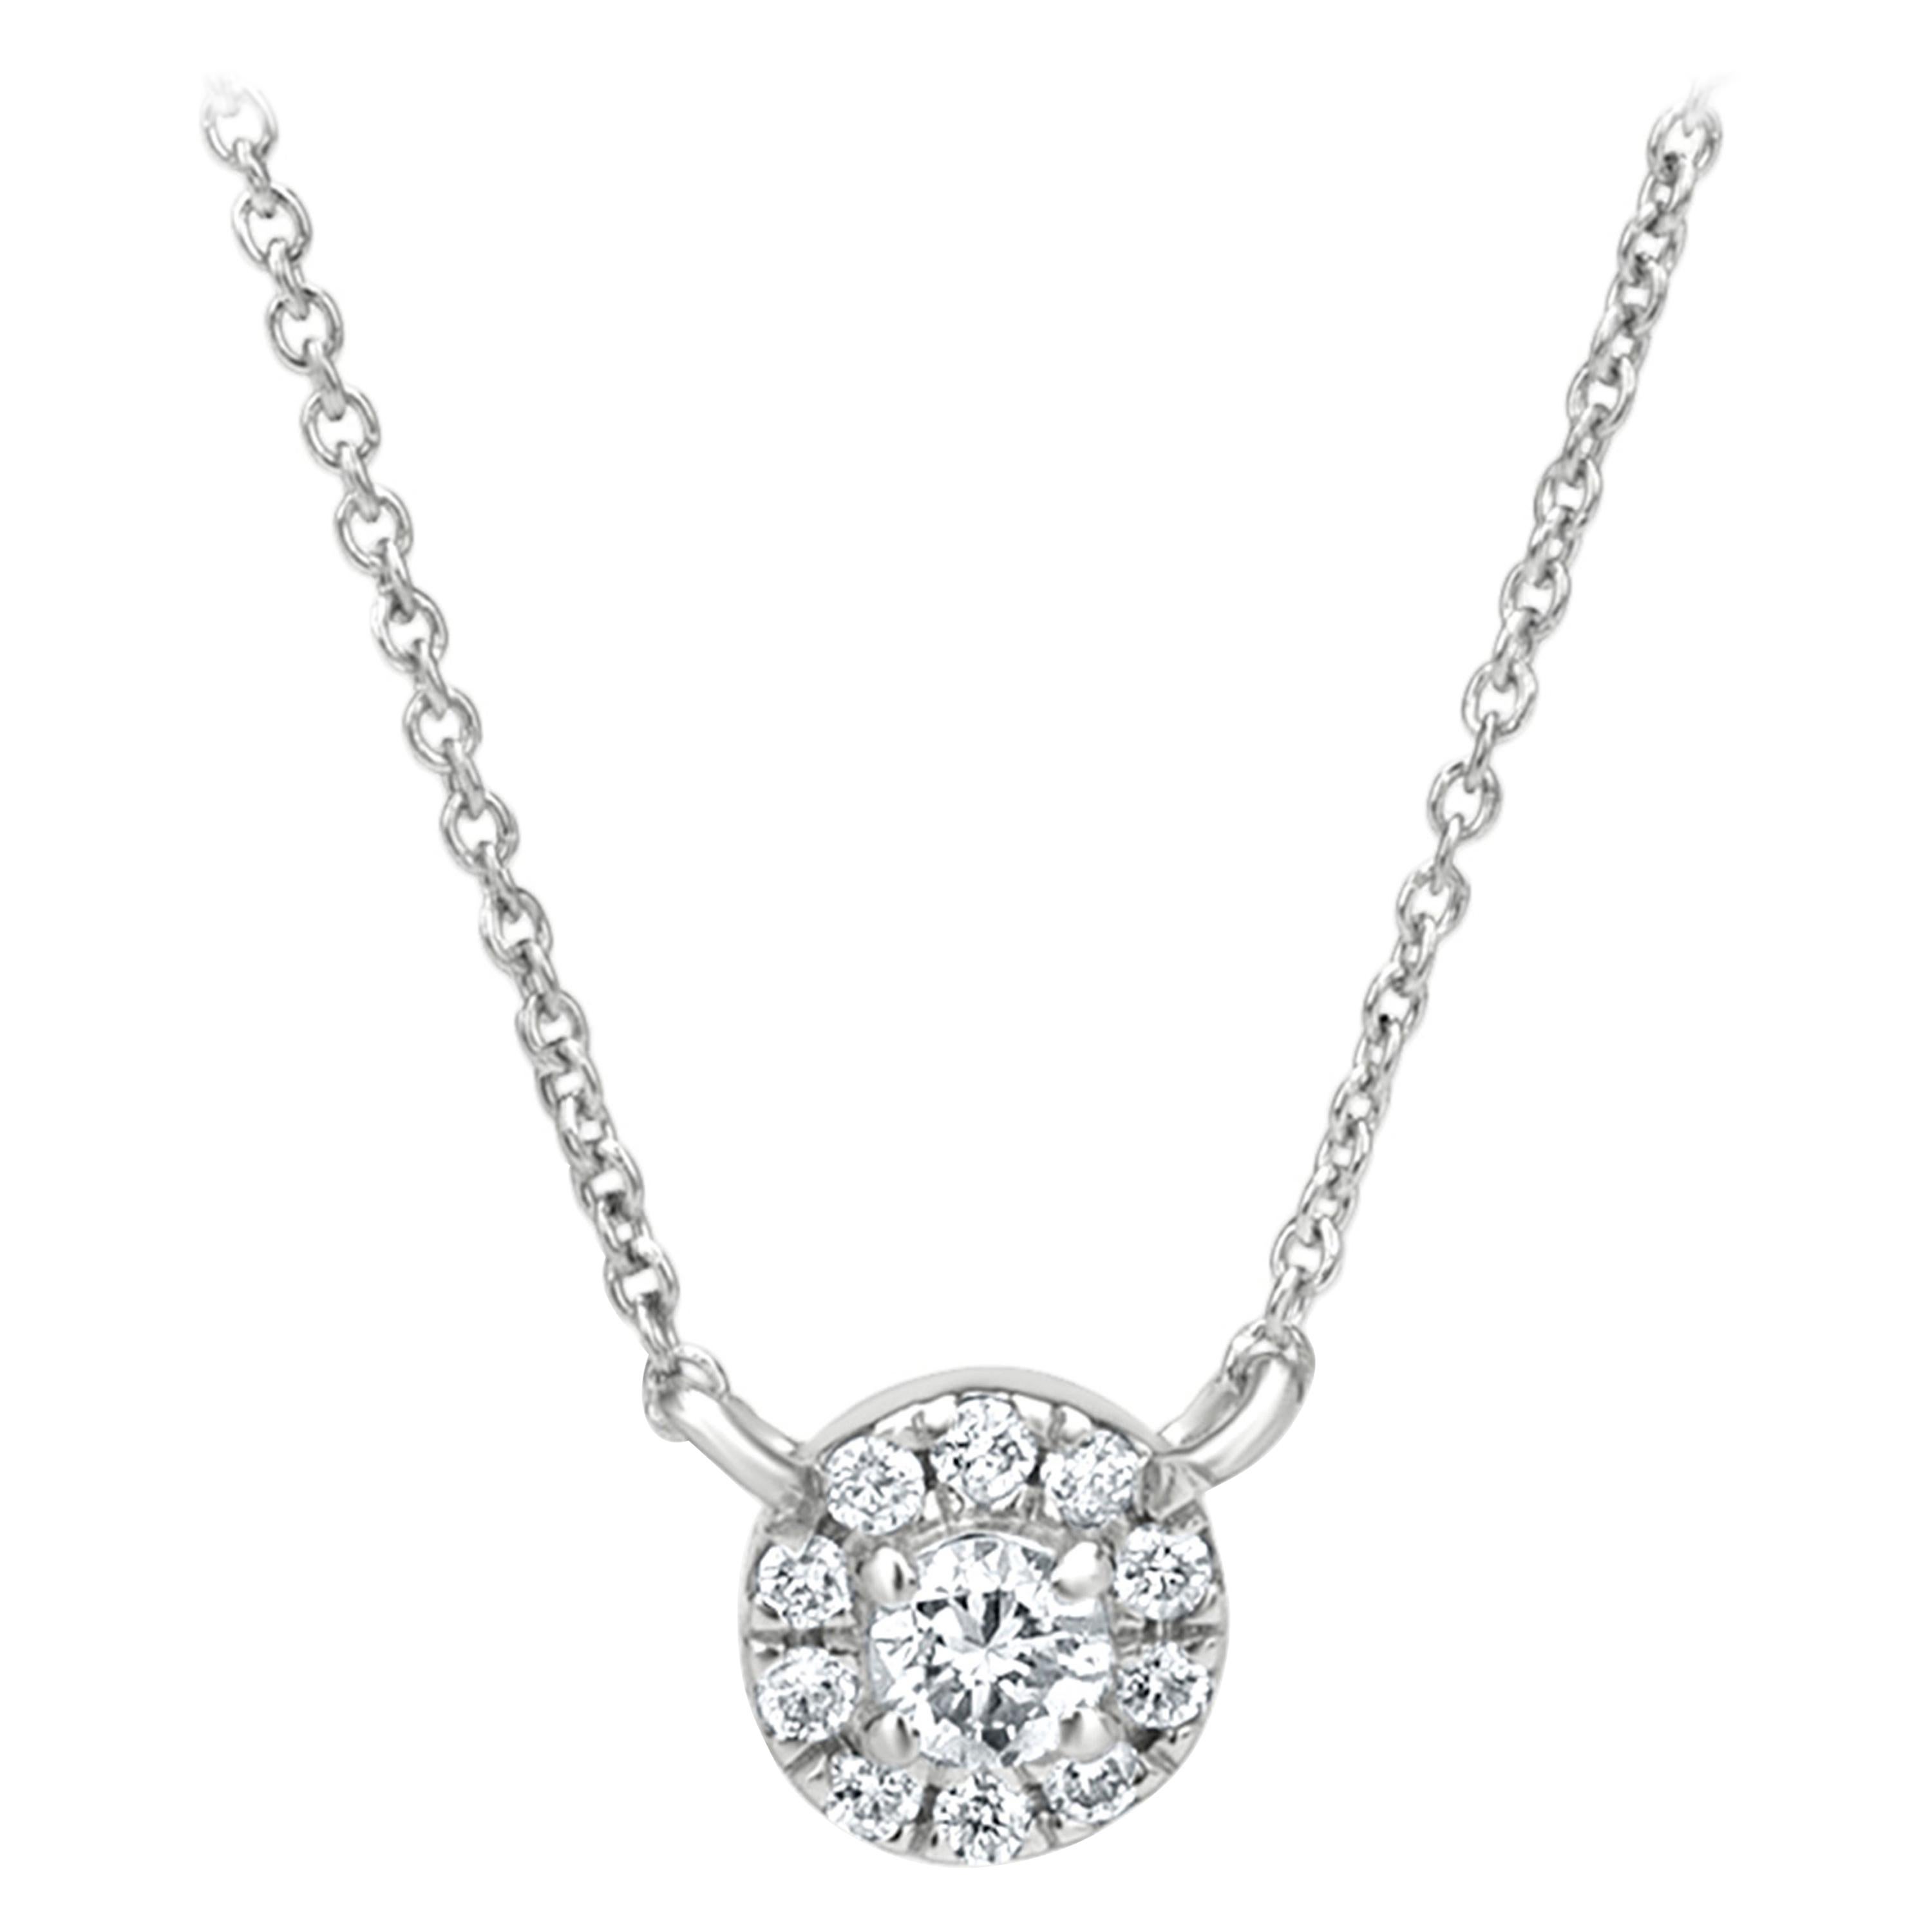 Luxle Circle Diamond Pendant Necklace in 18k White Gold